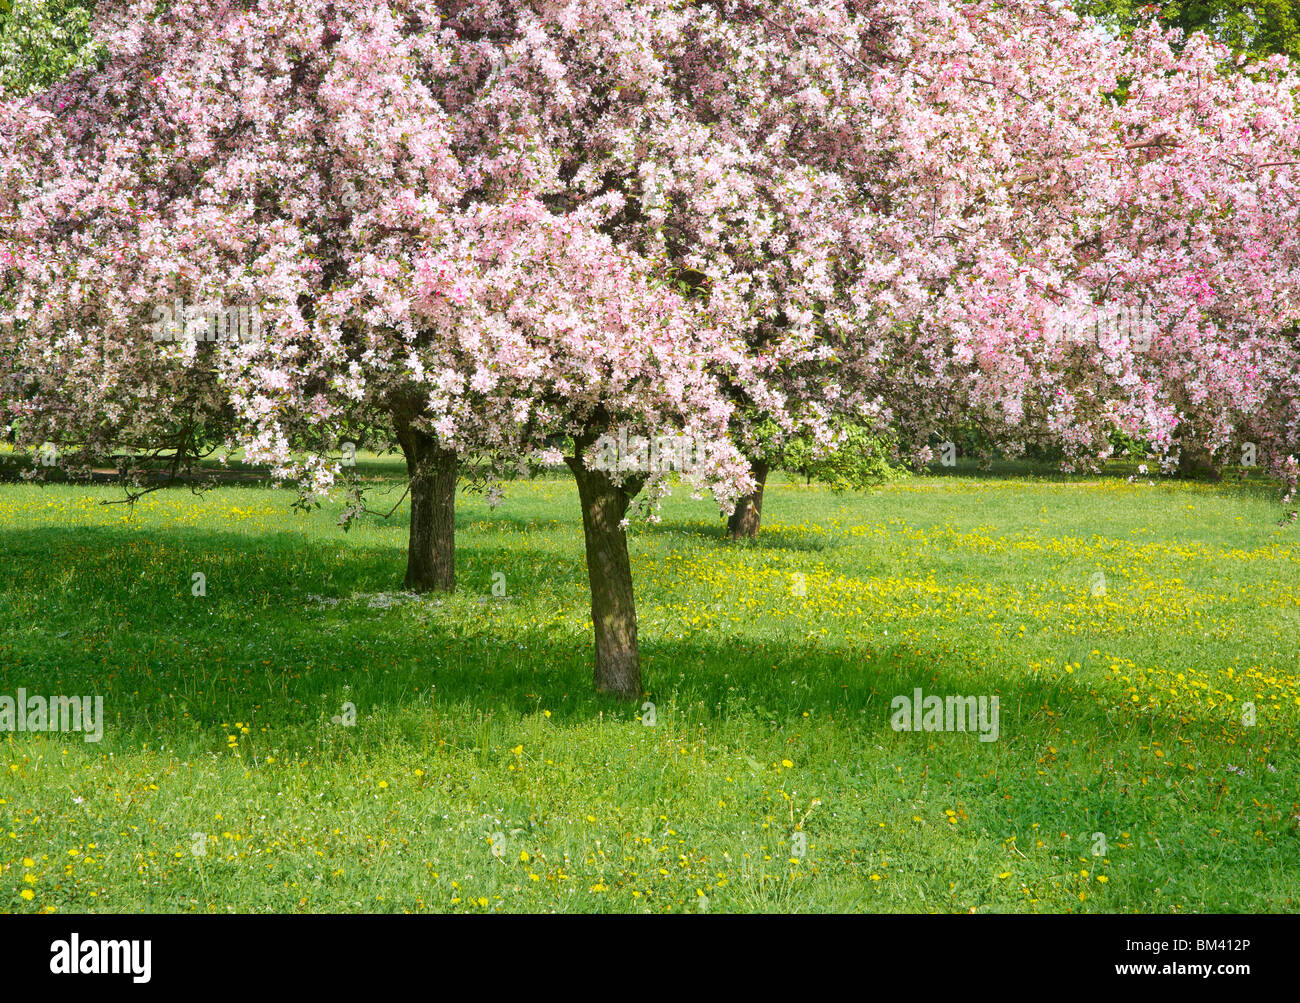 Flowering fruit tree, spring time Stock Photo